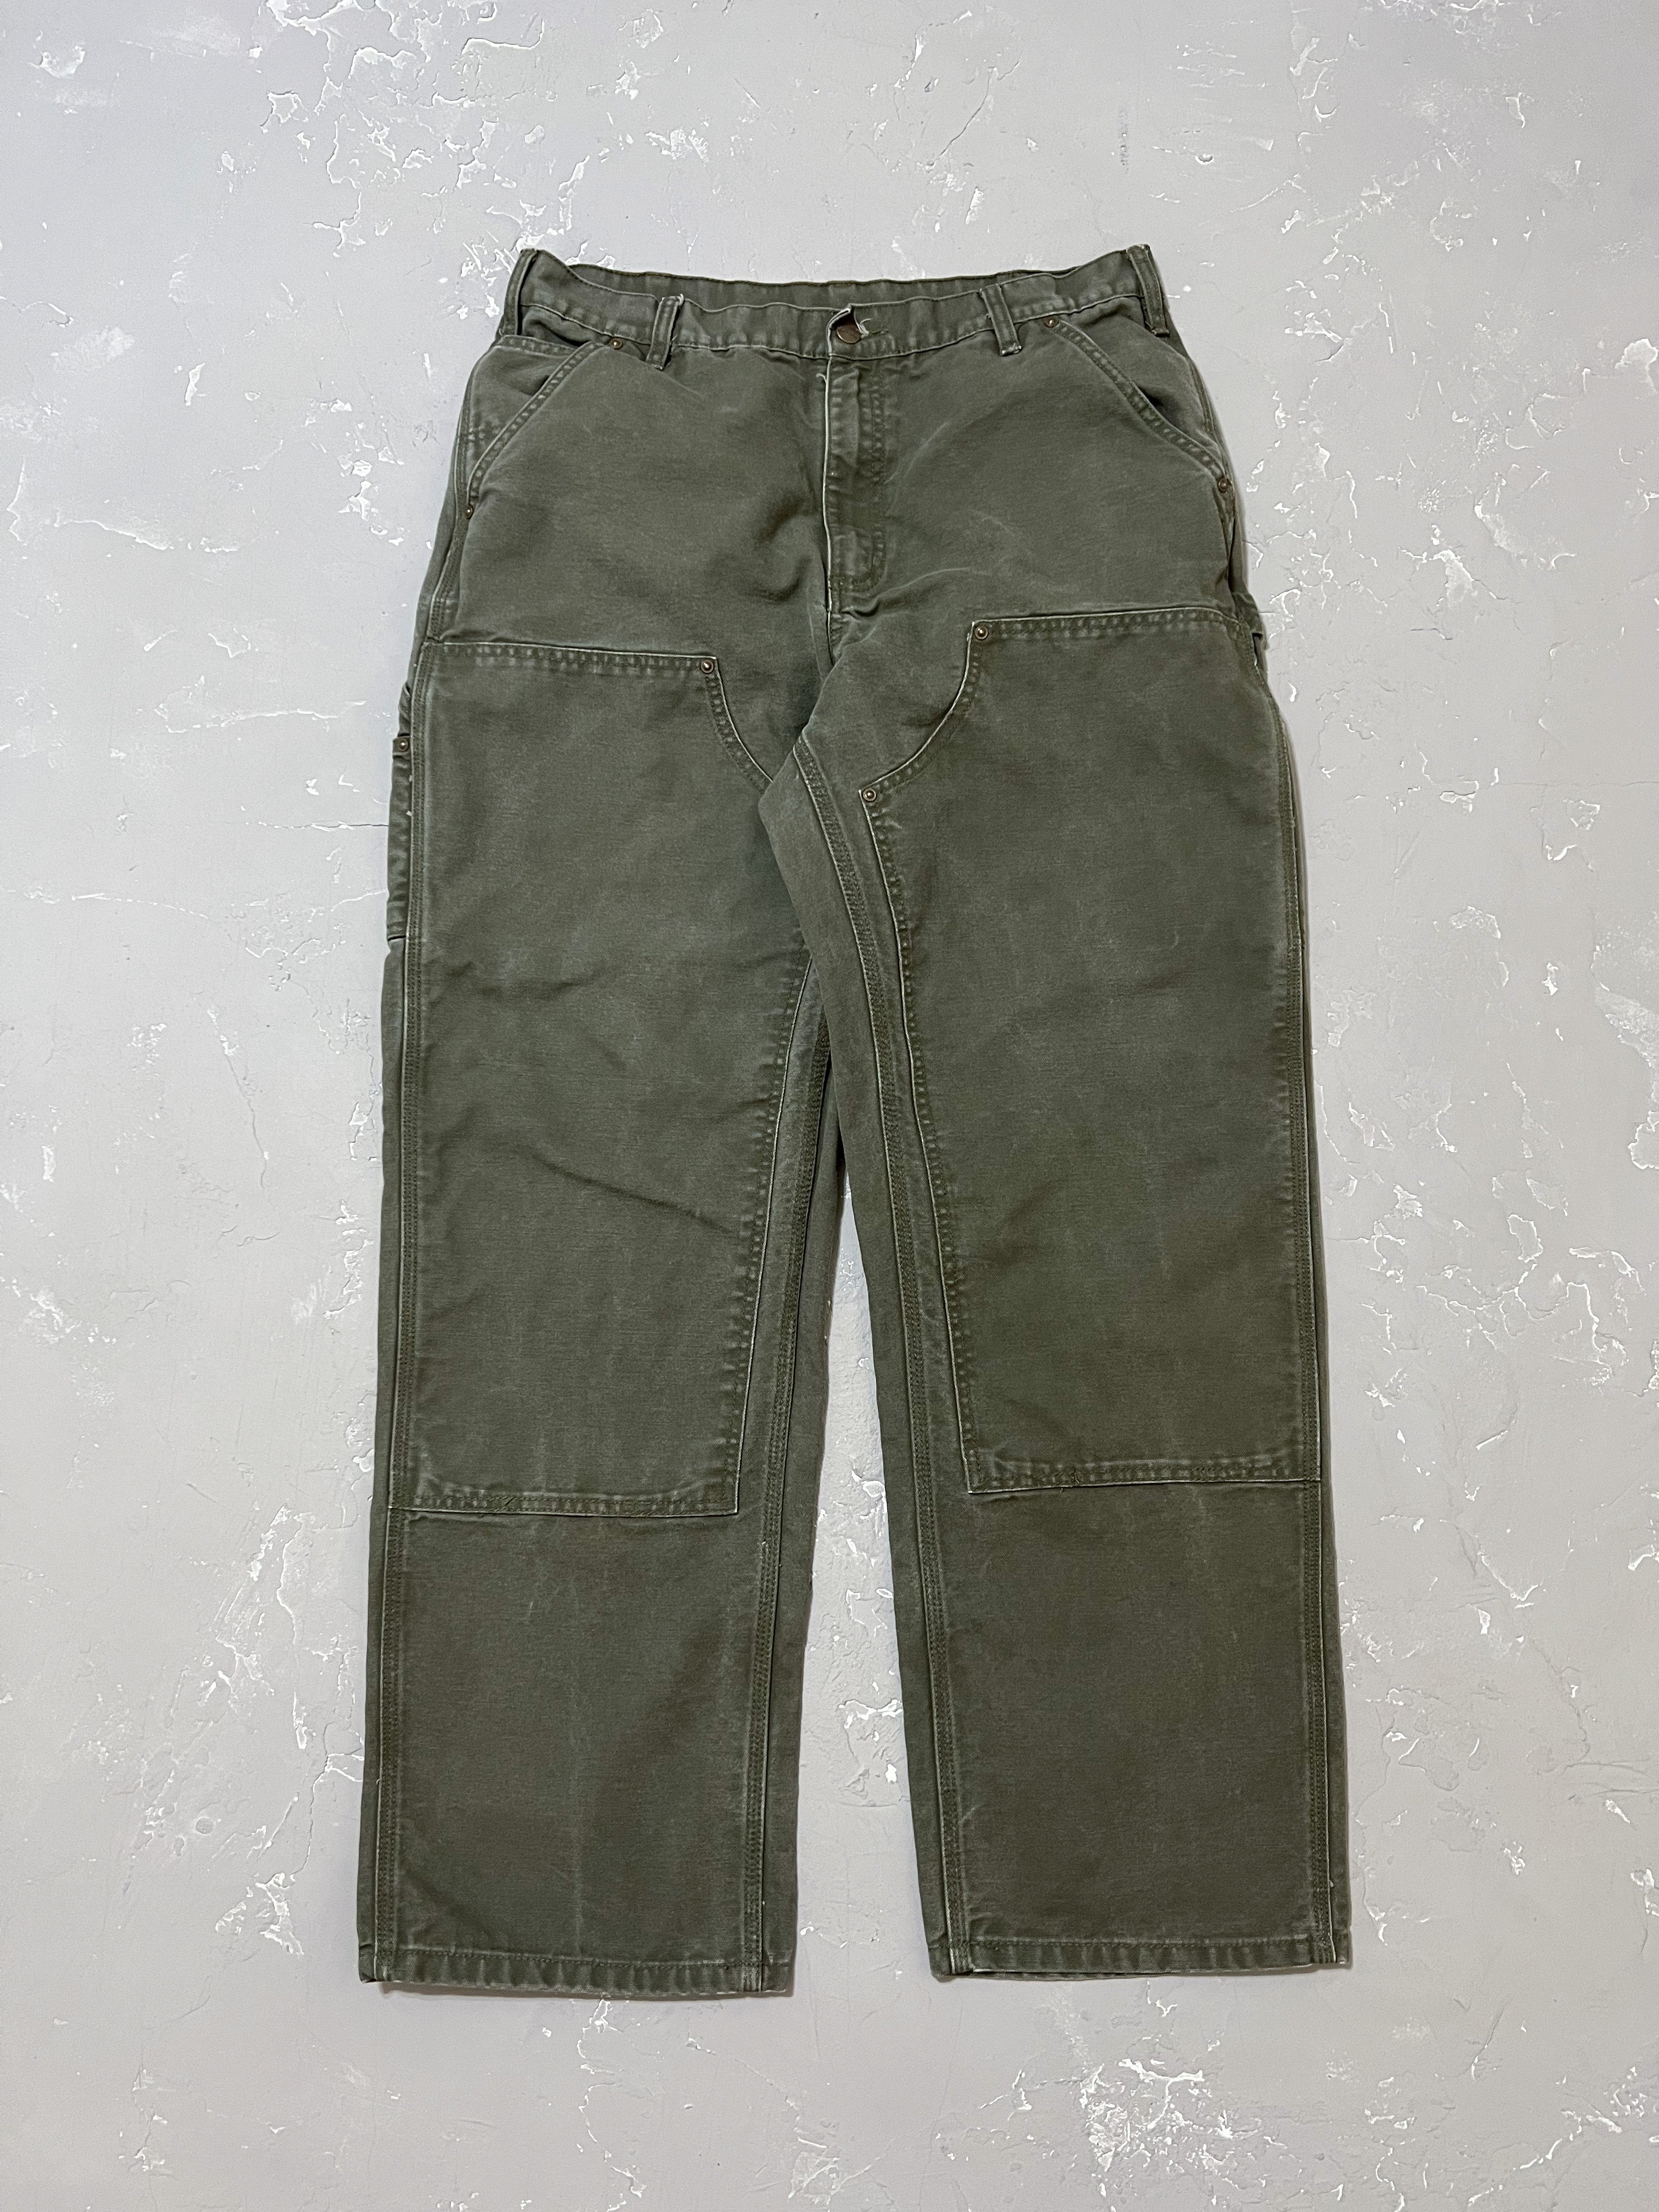 Carhartt Moss Green Double Knee Pants [36 x 32]